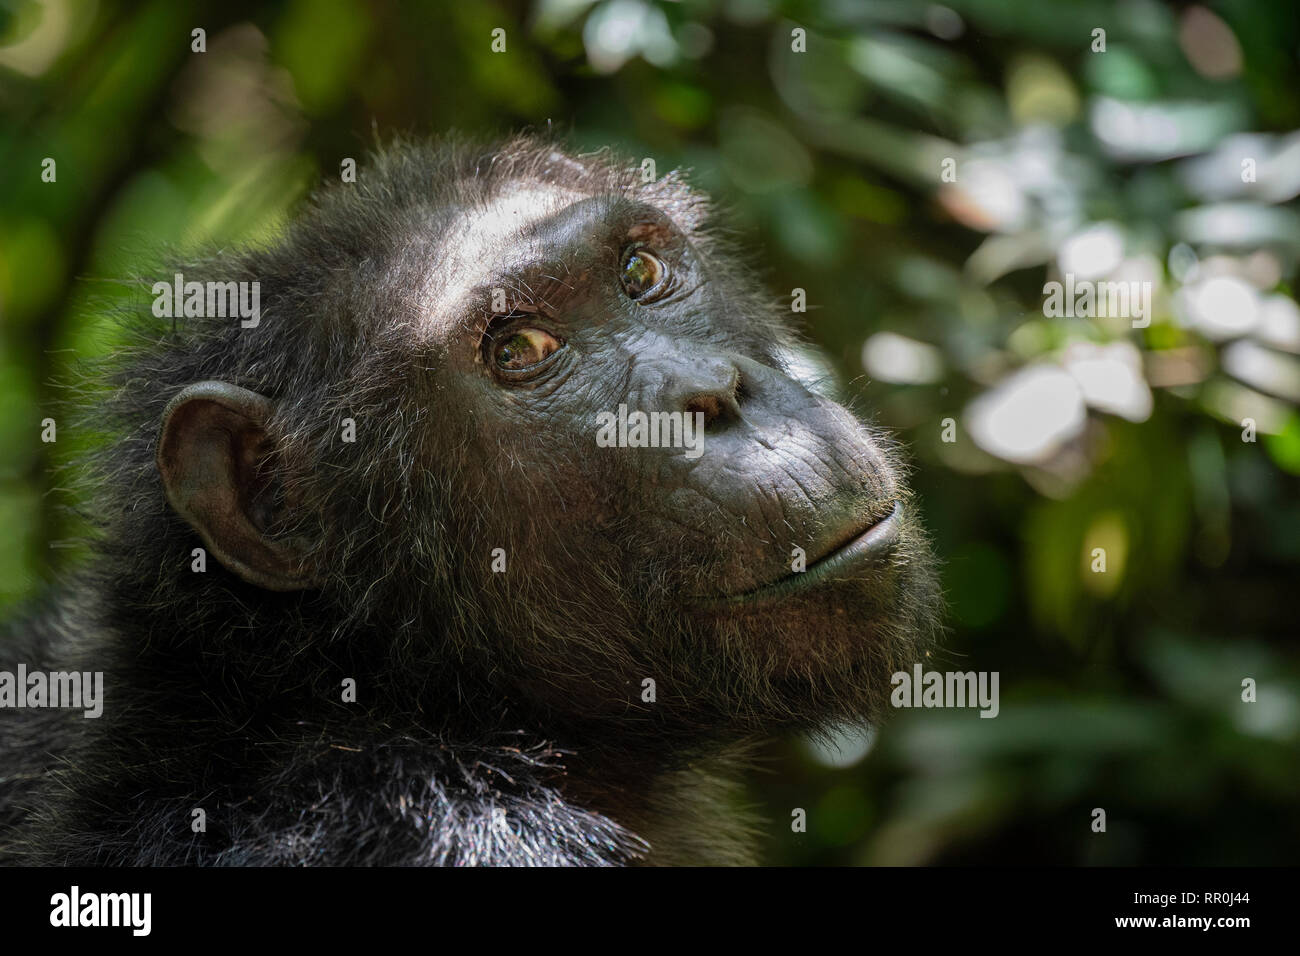 Chimpanzee, Pan troglodytes, Kyambura Gorge, Queen Elizabeth NP, Uganda Stock Photo